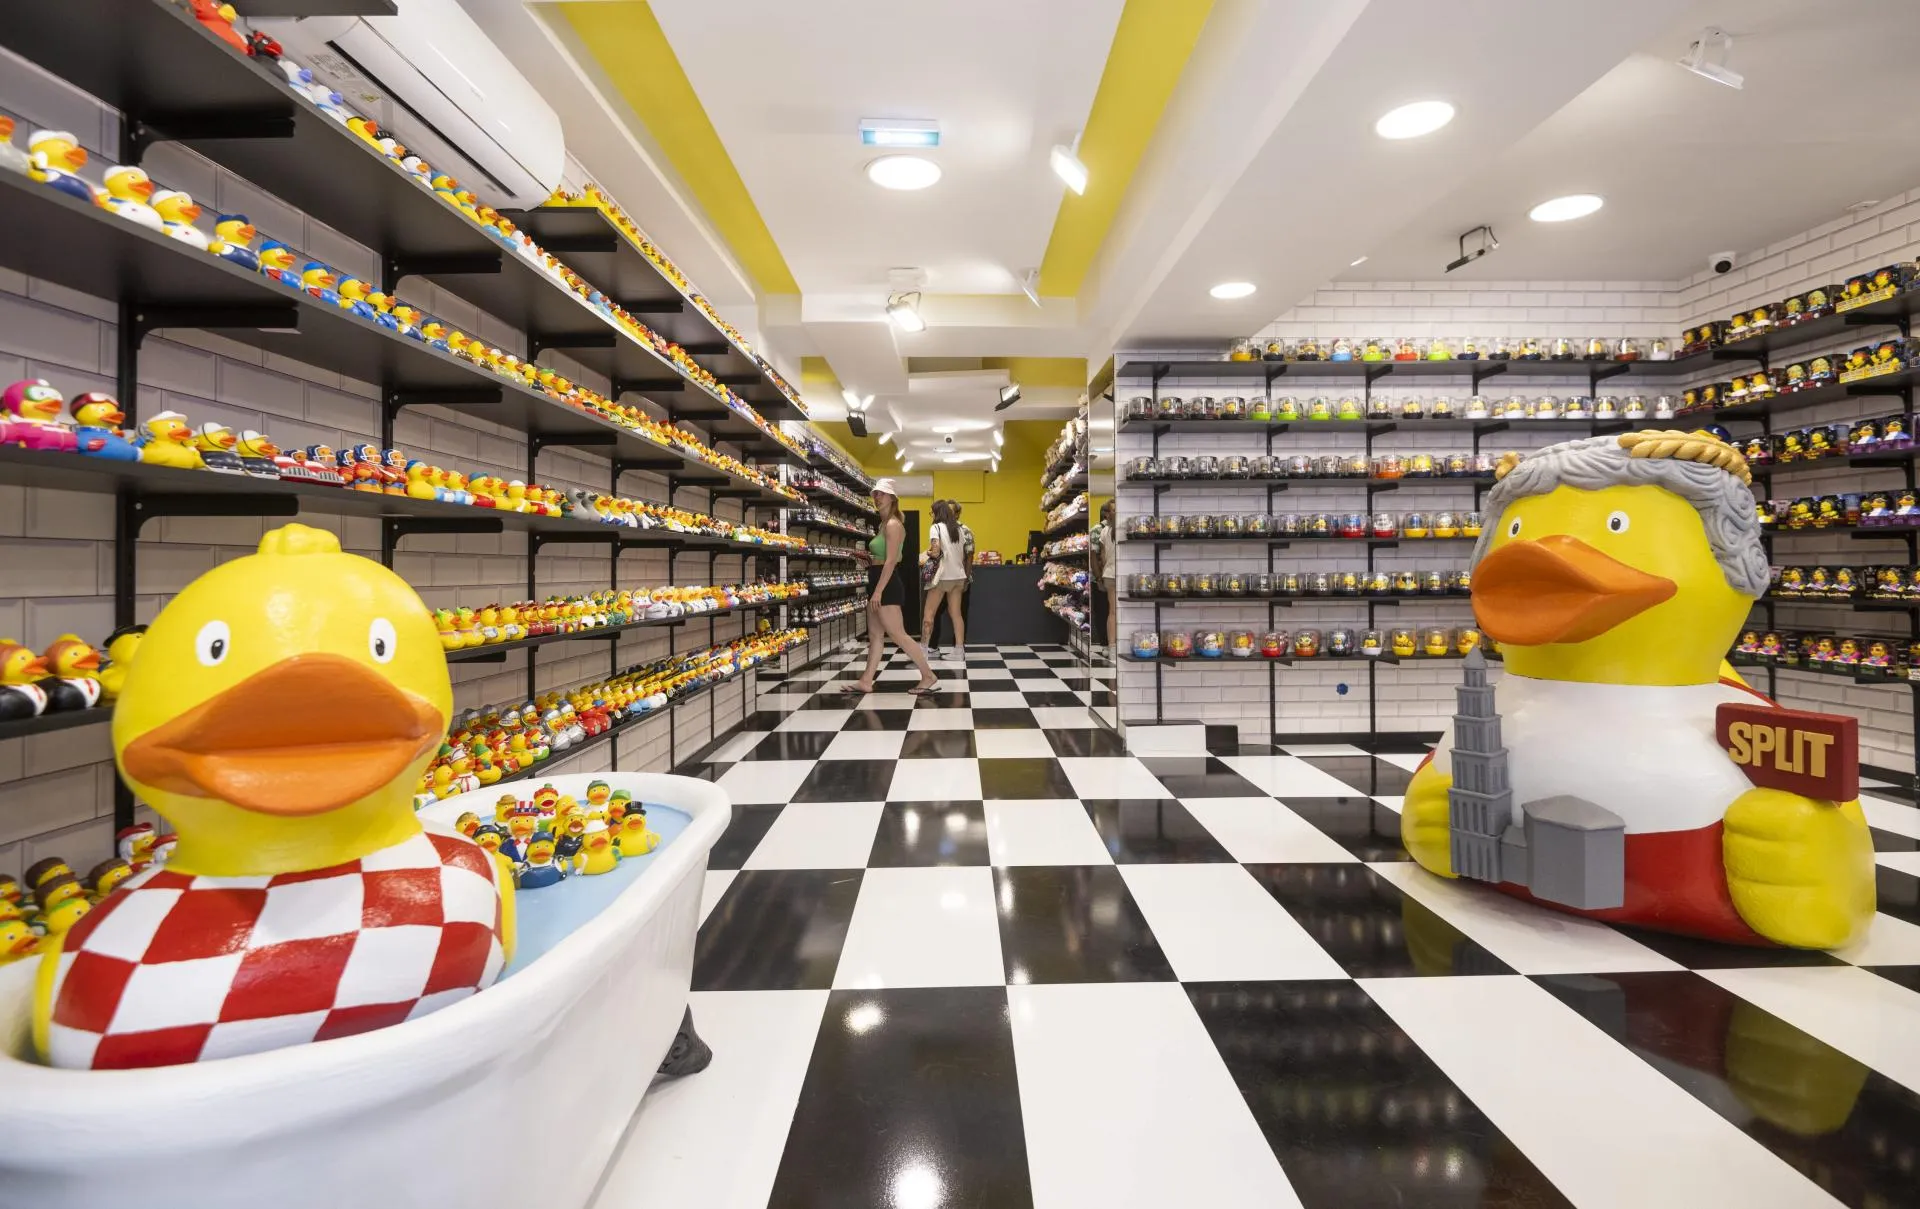 Duck Shop Split in Croatia, europe | Souvenirs - Country Helper